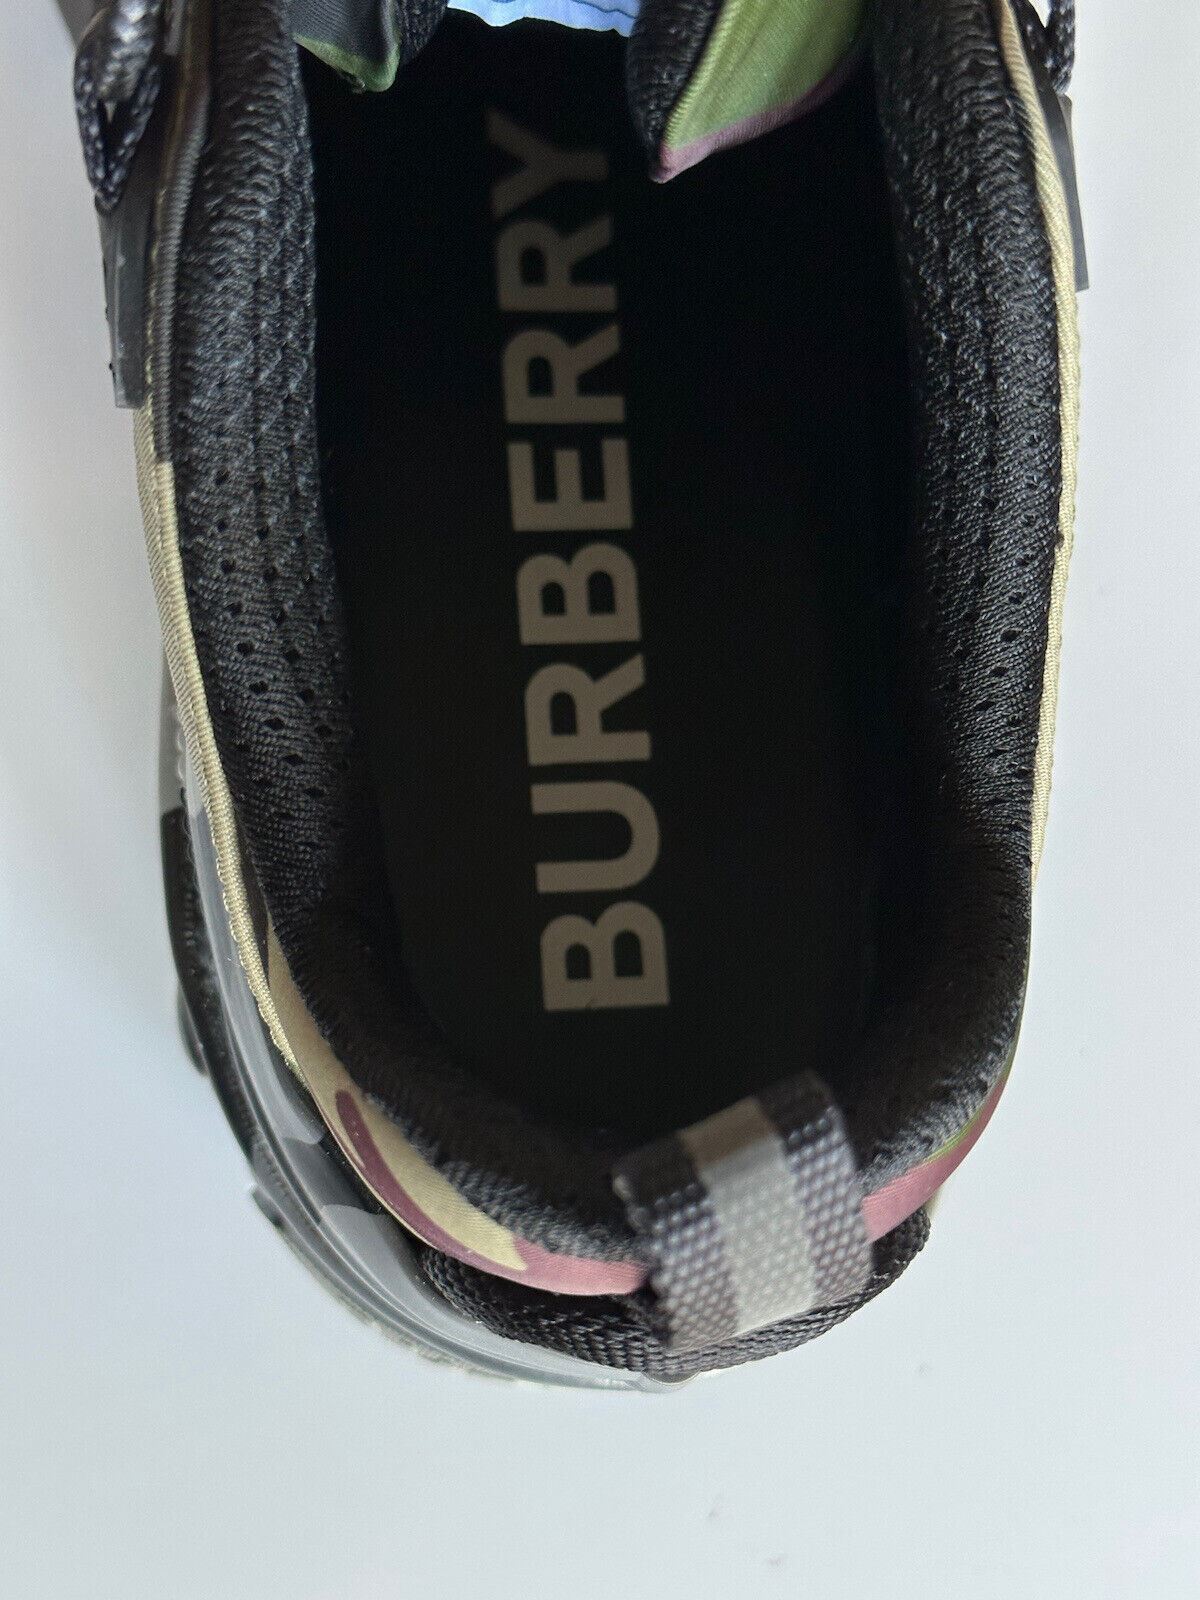 NIB $890 Burberry Men's Arthur Mangrove Green Sneakers 10 US (43 Eu) 8042185 IT